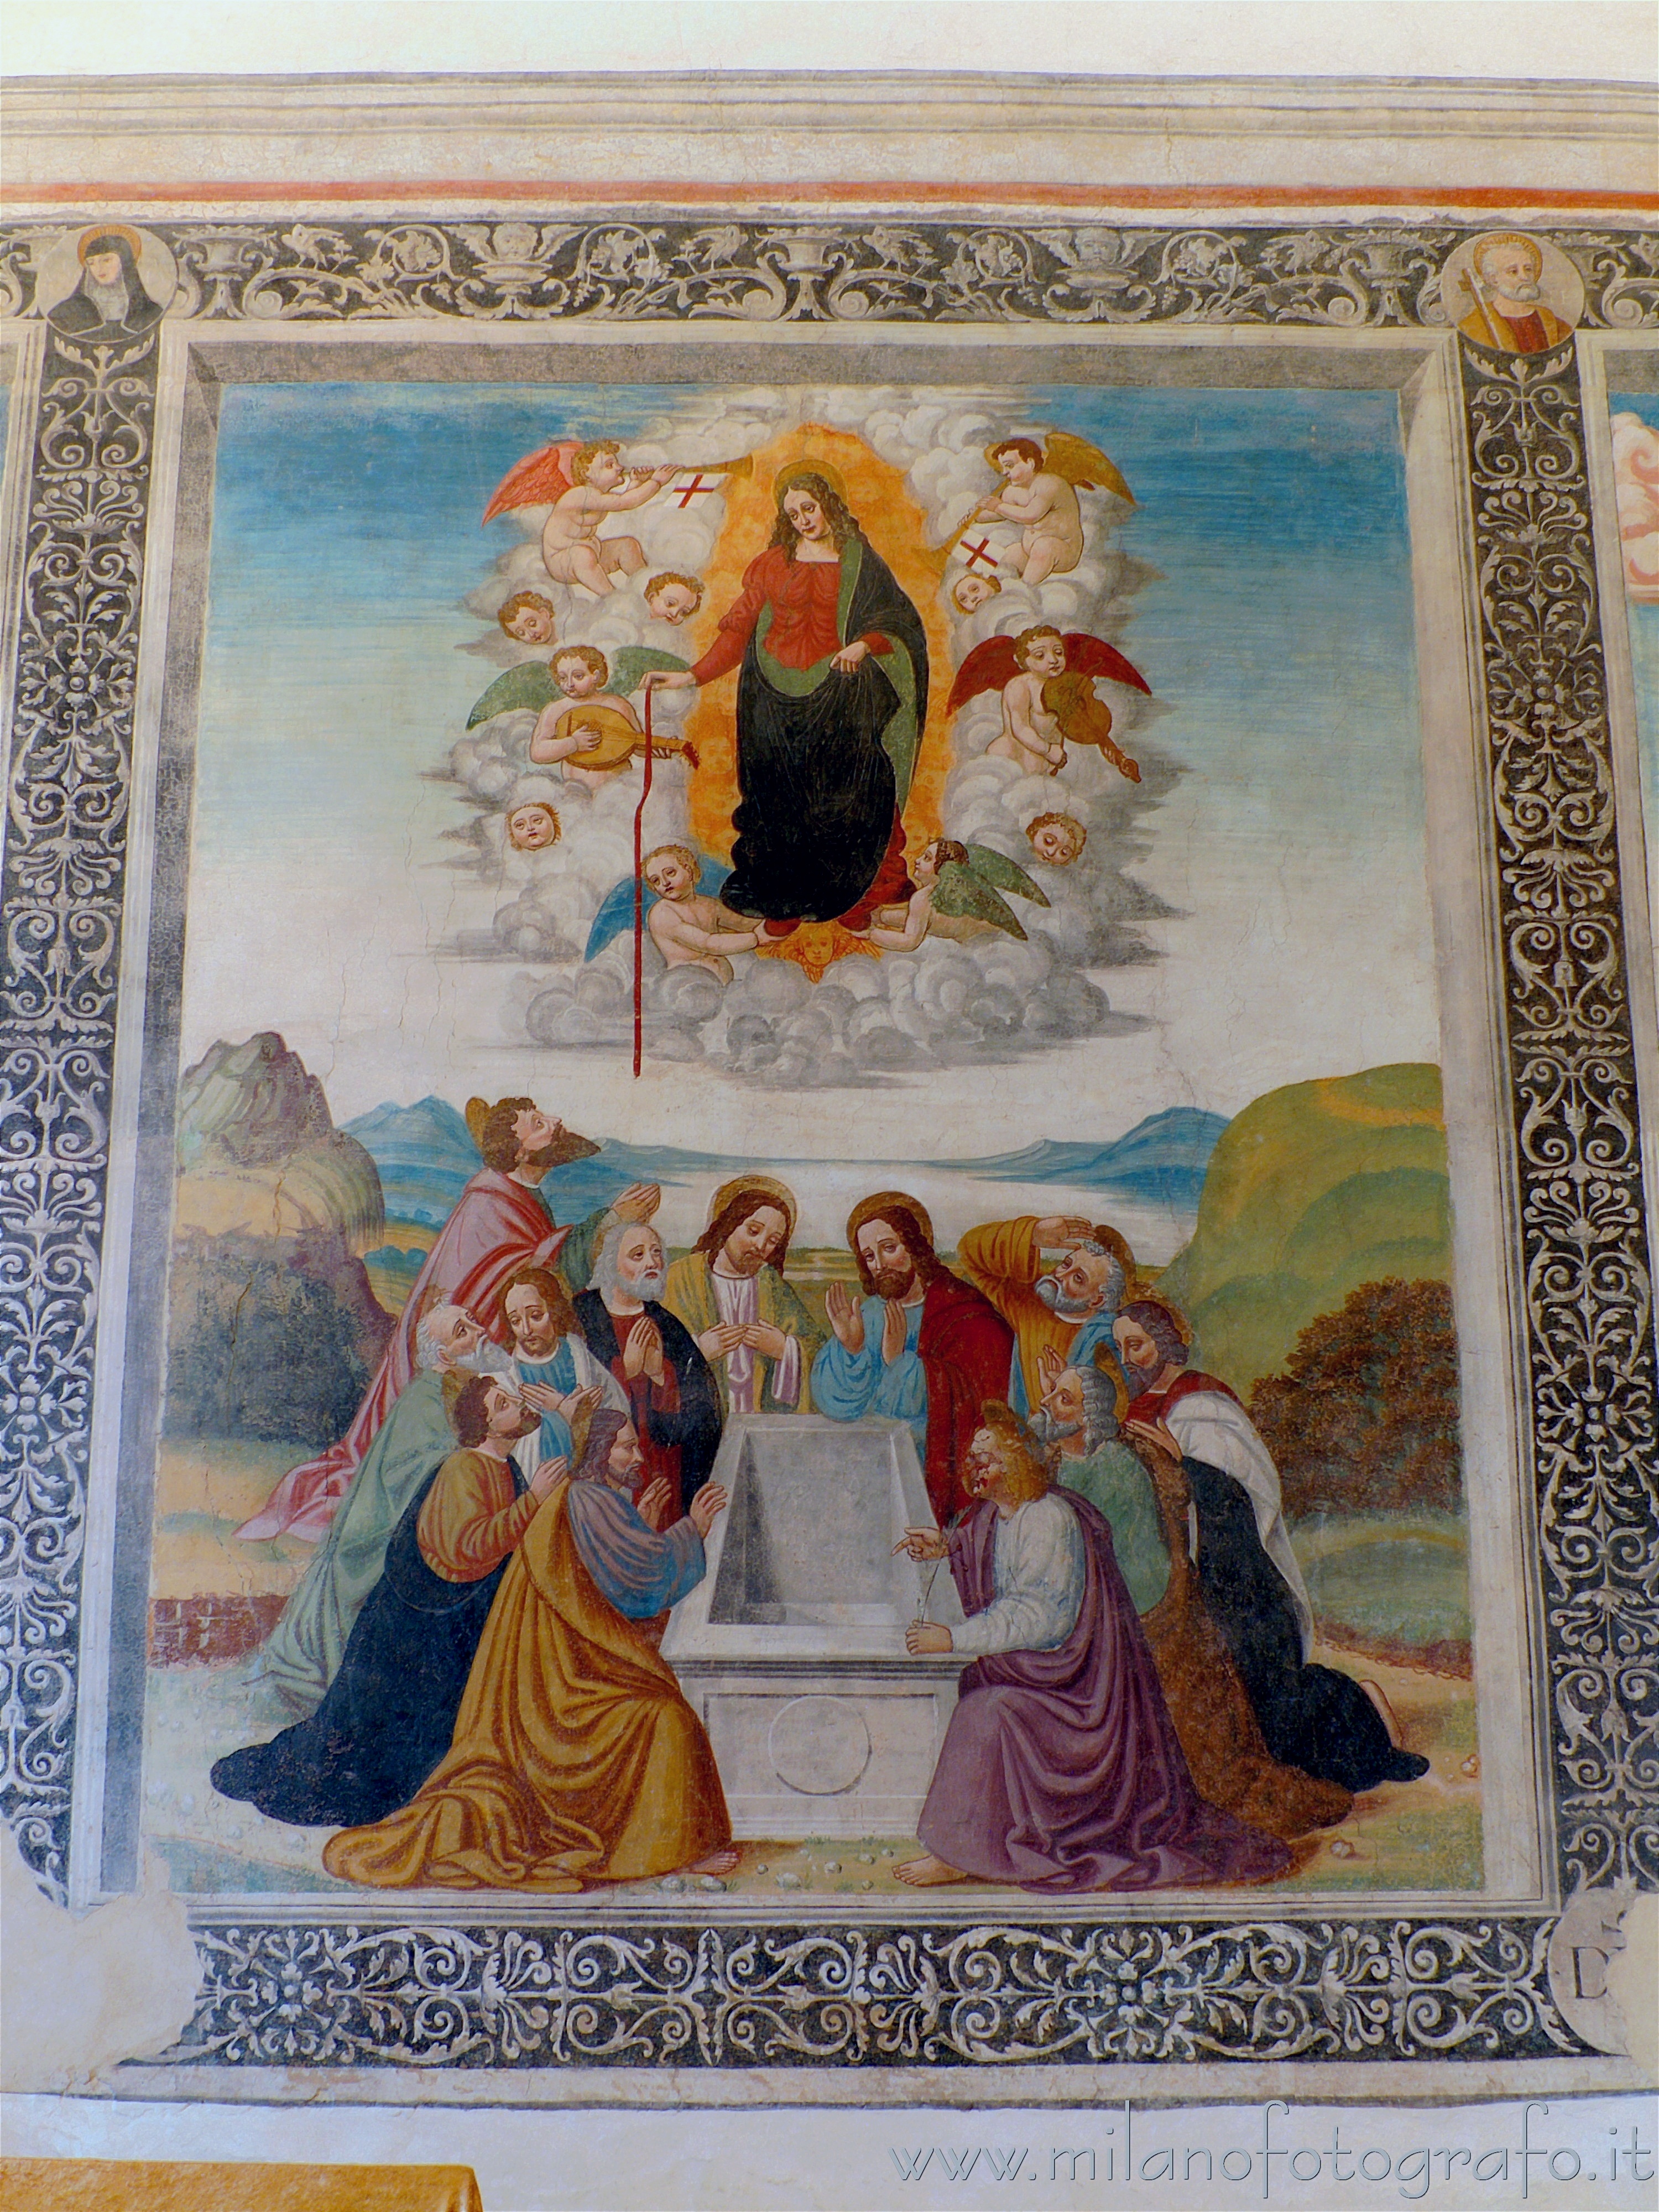 Besana in Brianza (Monza e Brianza, Italy): Assumption in the Former Benedictine Monastery of Brugora - Besana in Brianza (Monza e Brianza, Italy)